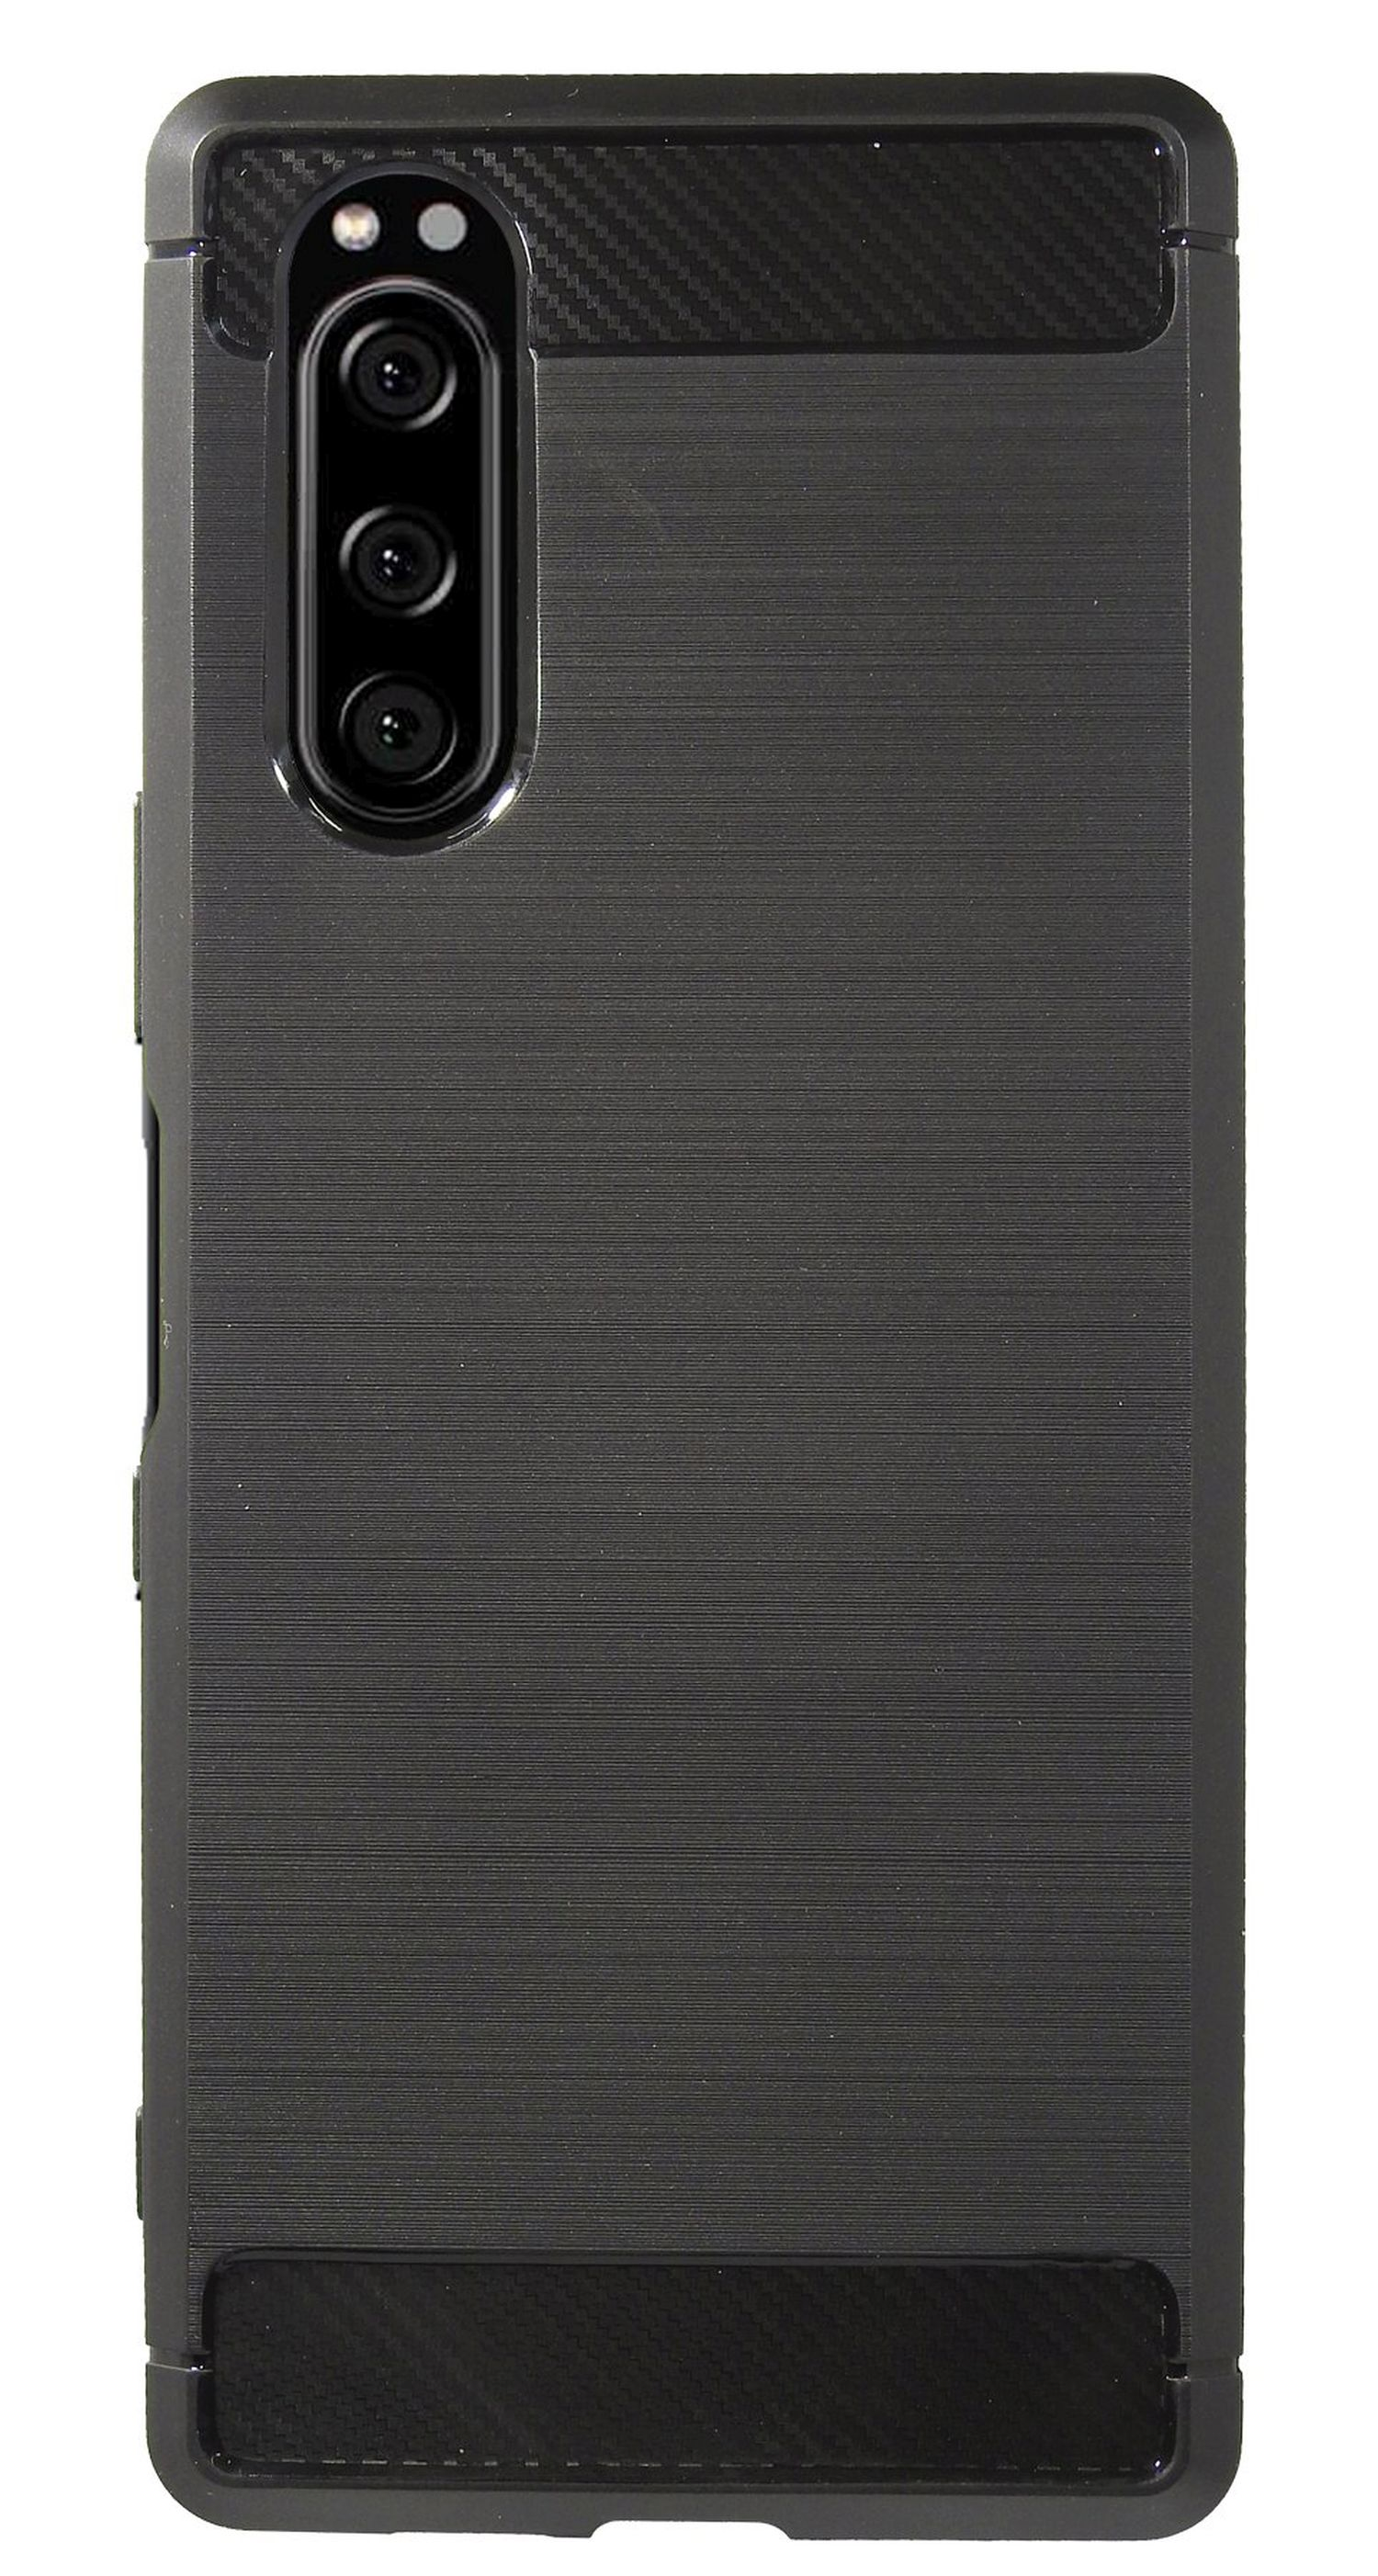 COFI Carbon-Look Case, Schwarz 5, Xperia Sony, Bumper